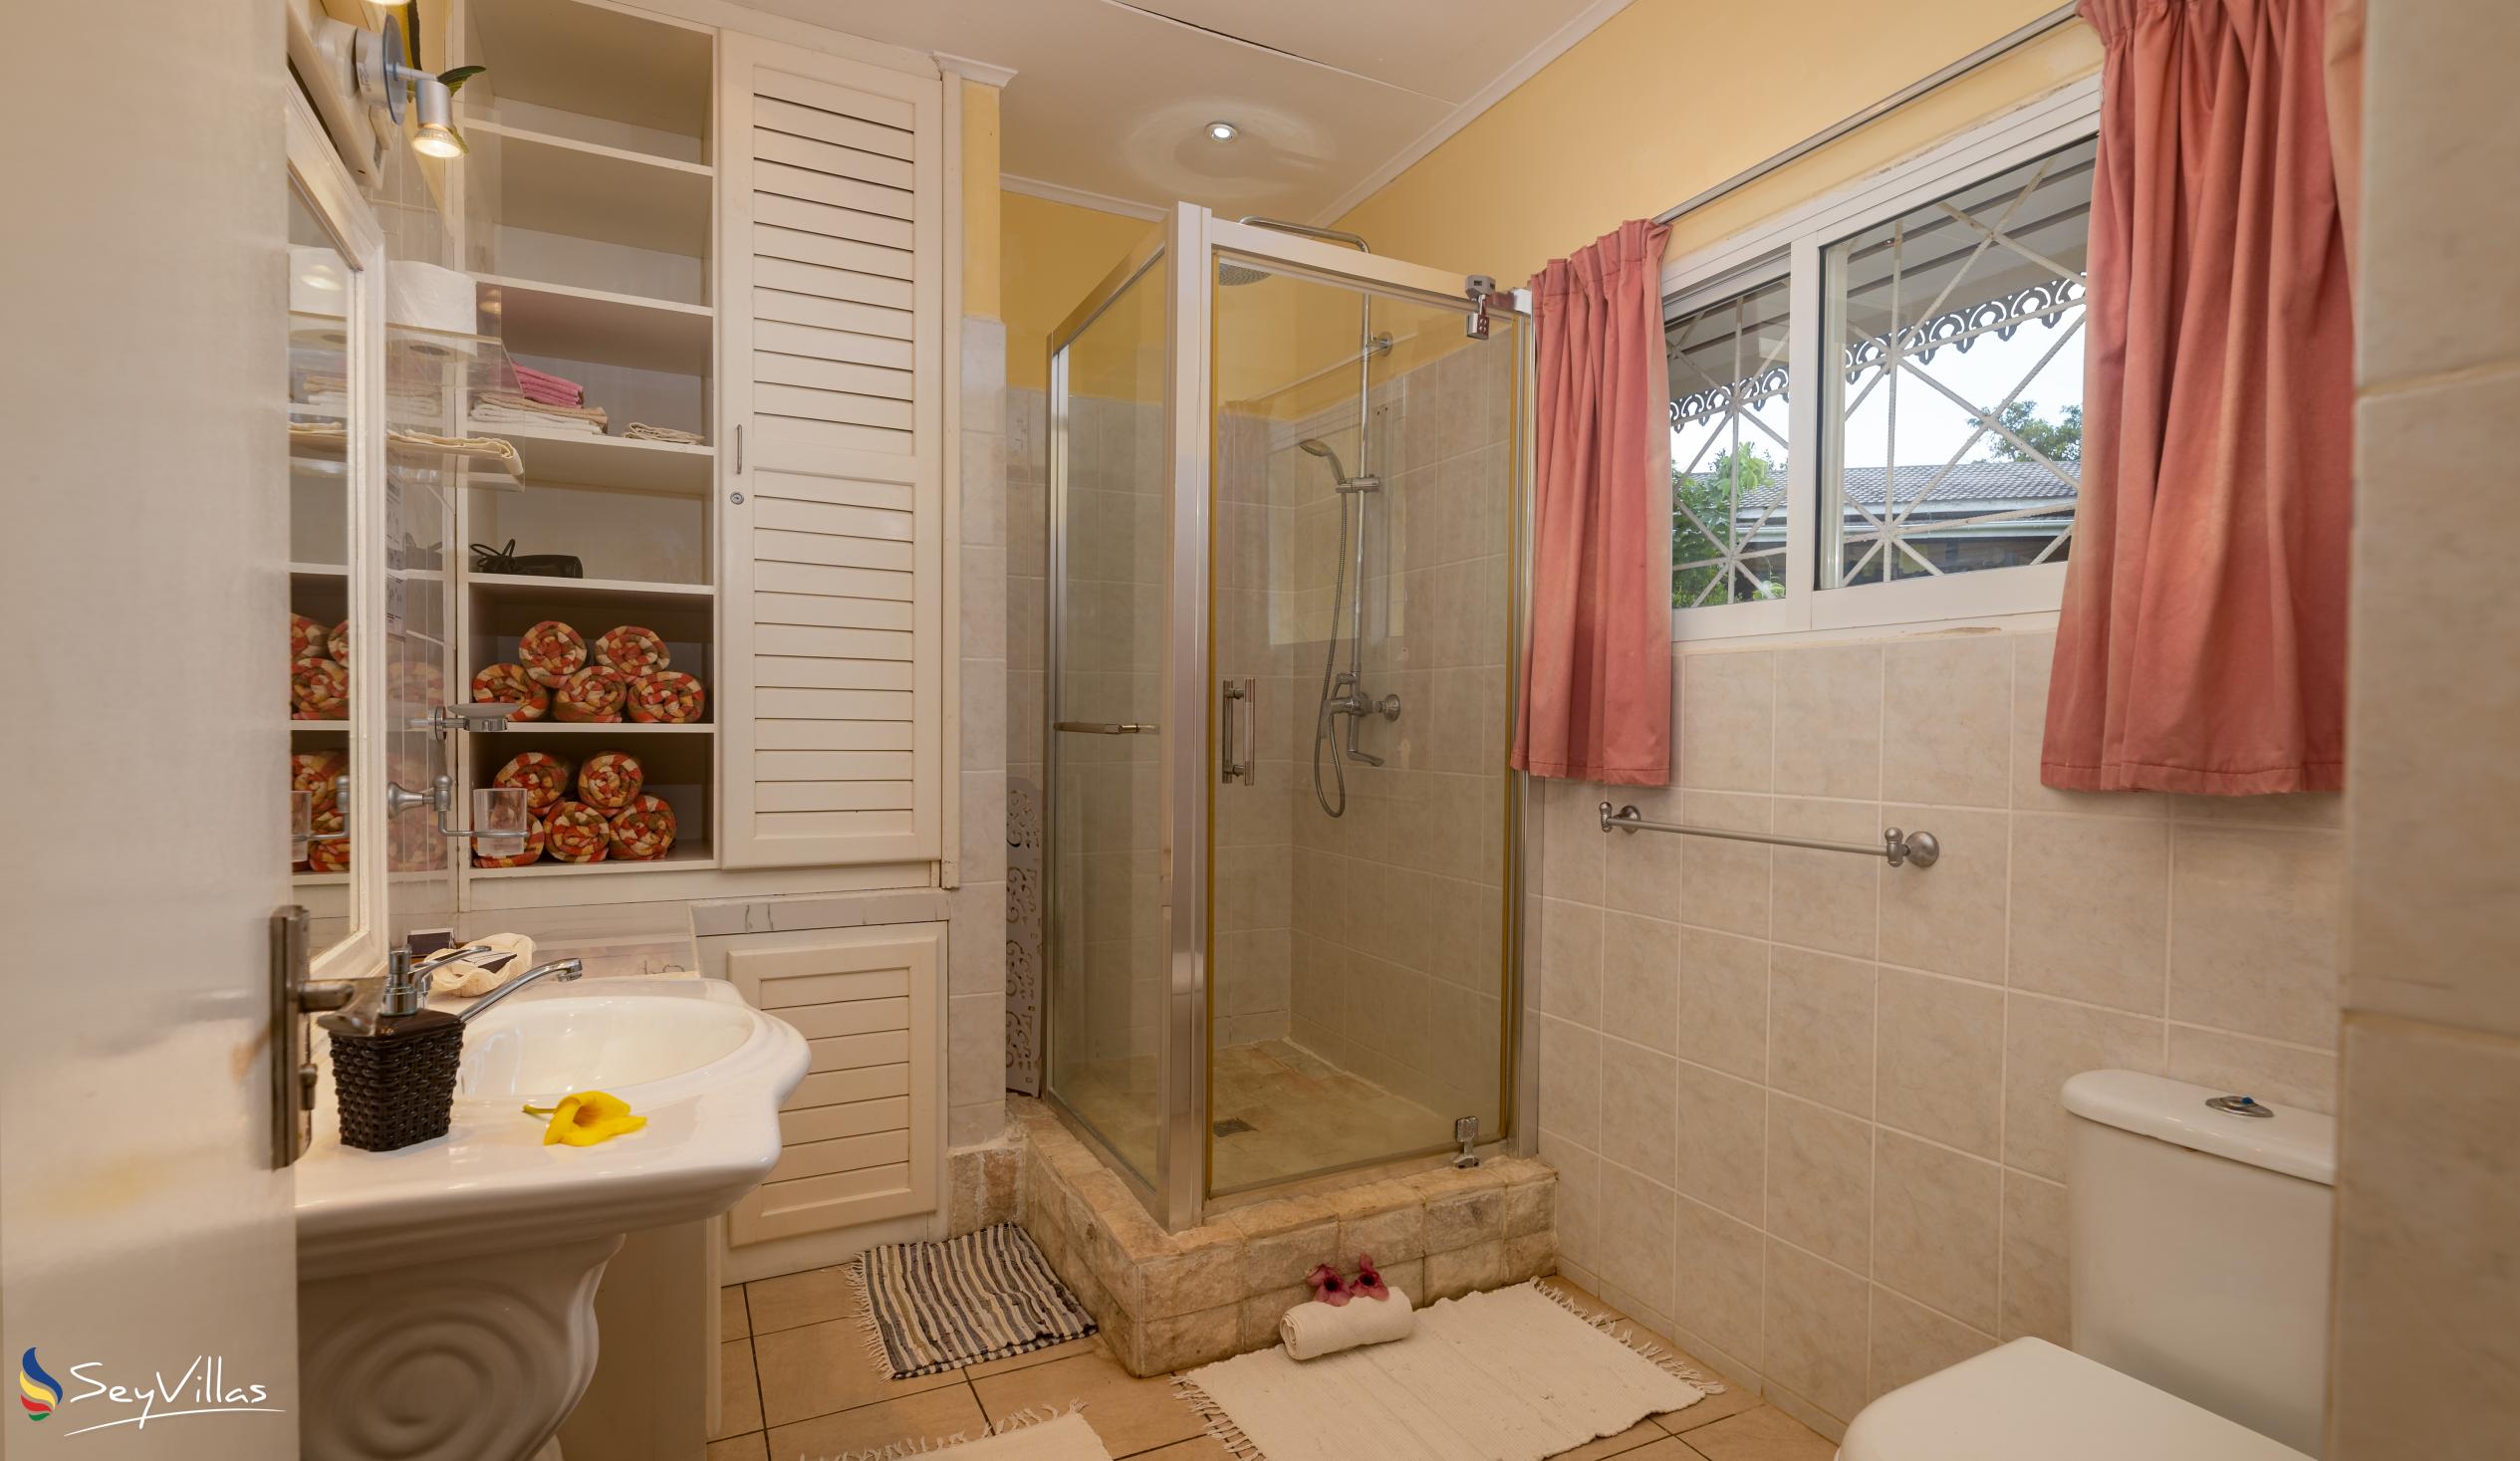 Photo 97: Residence Monte Cristo - 3-Bedroom Duplex - Mahé (Seychelles)